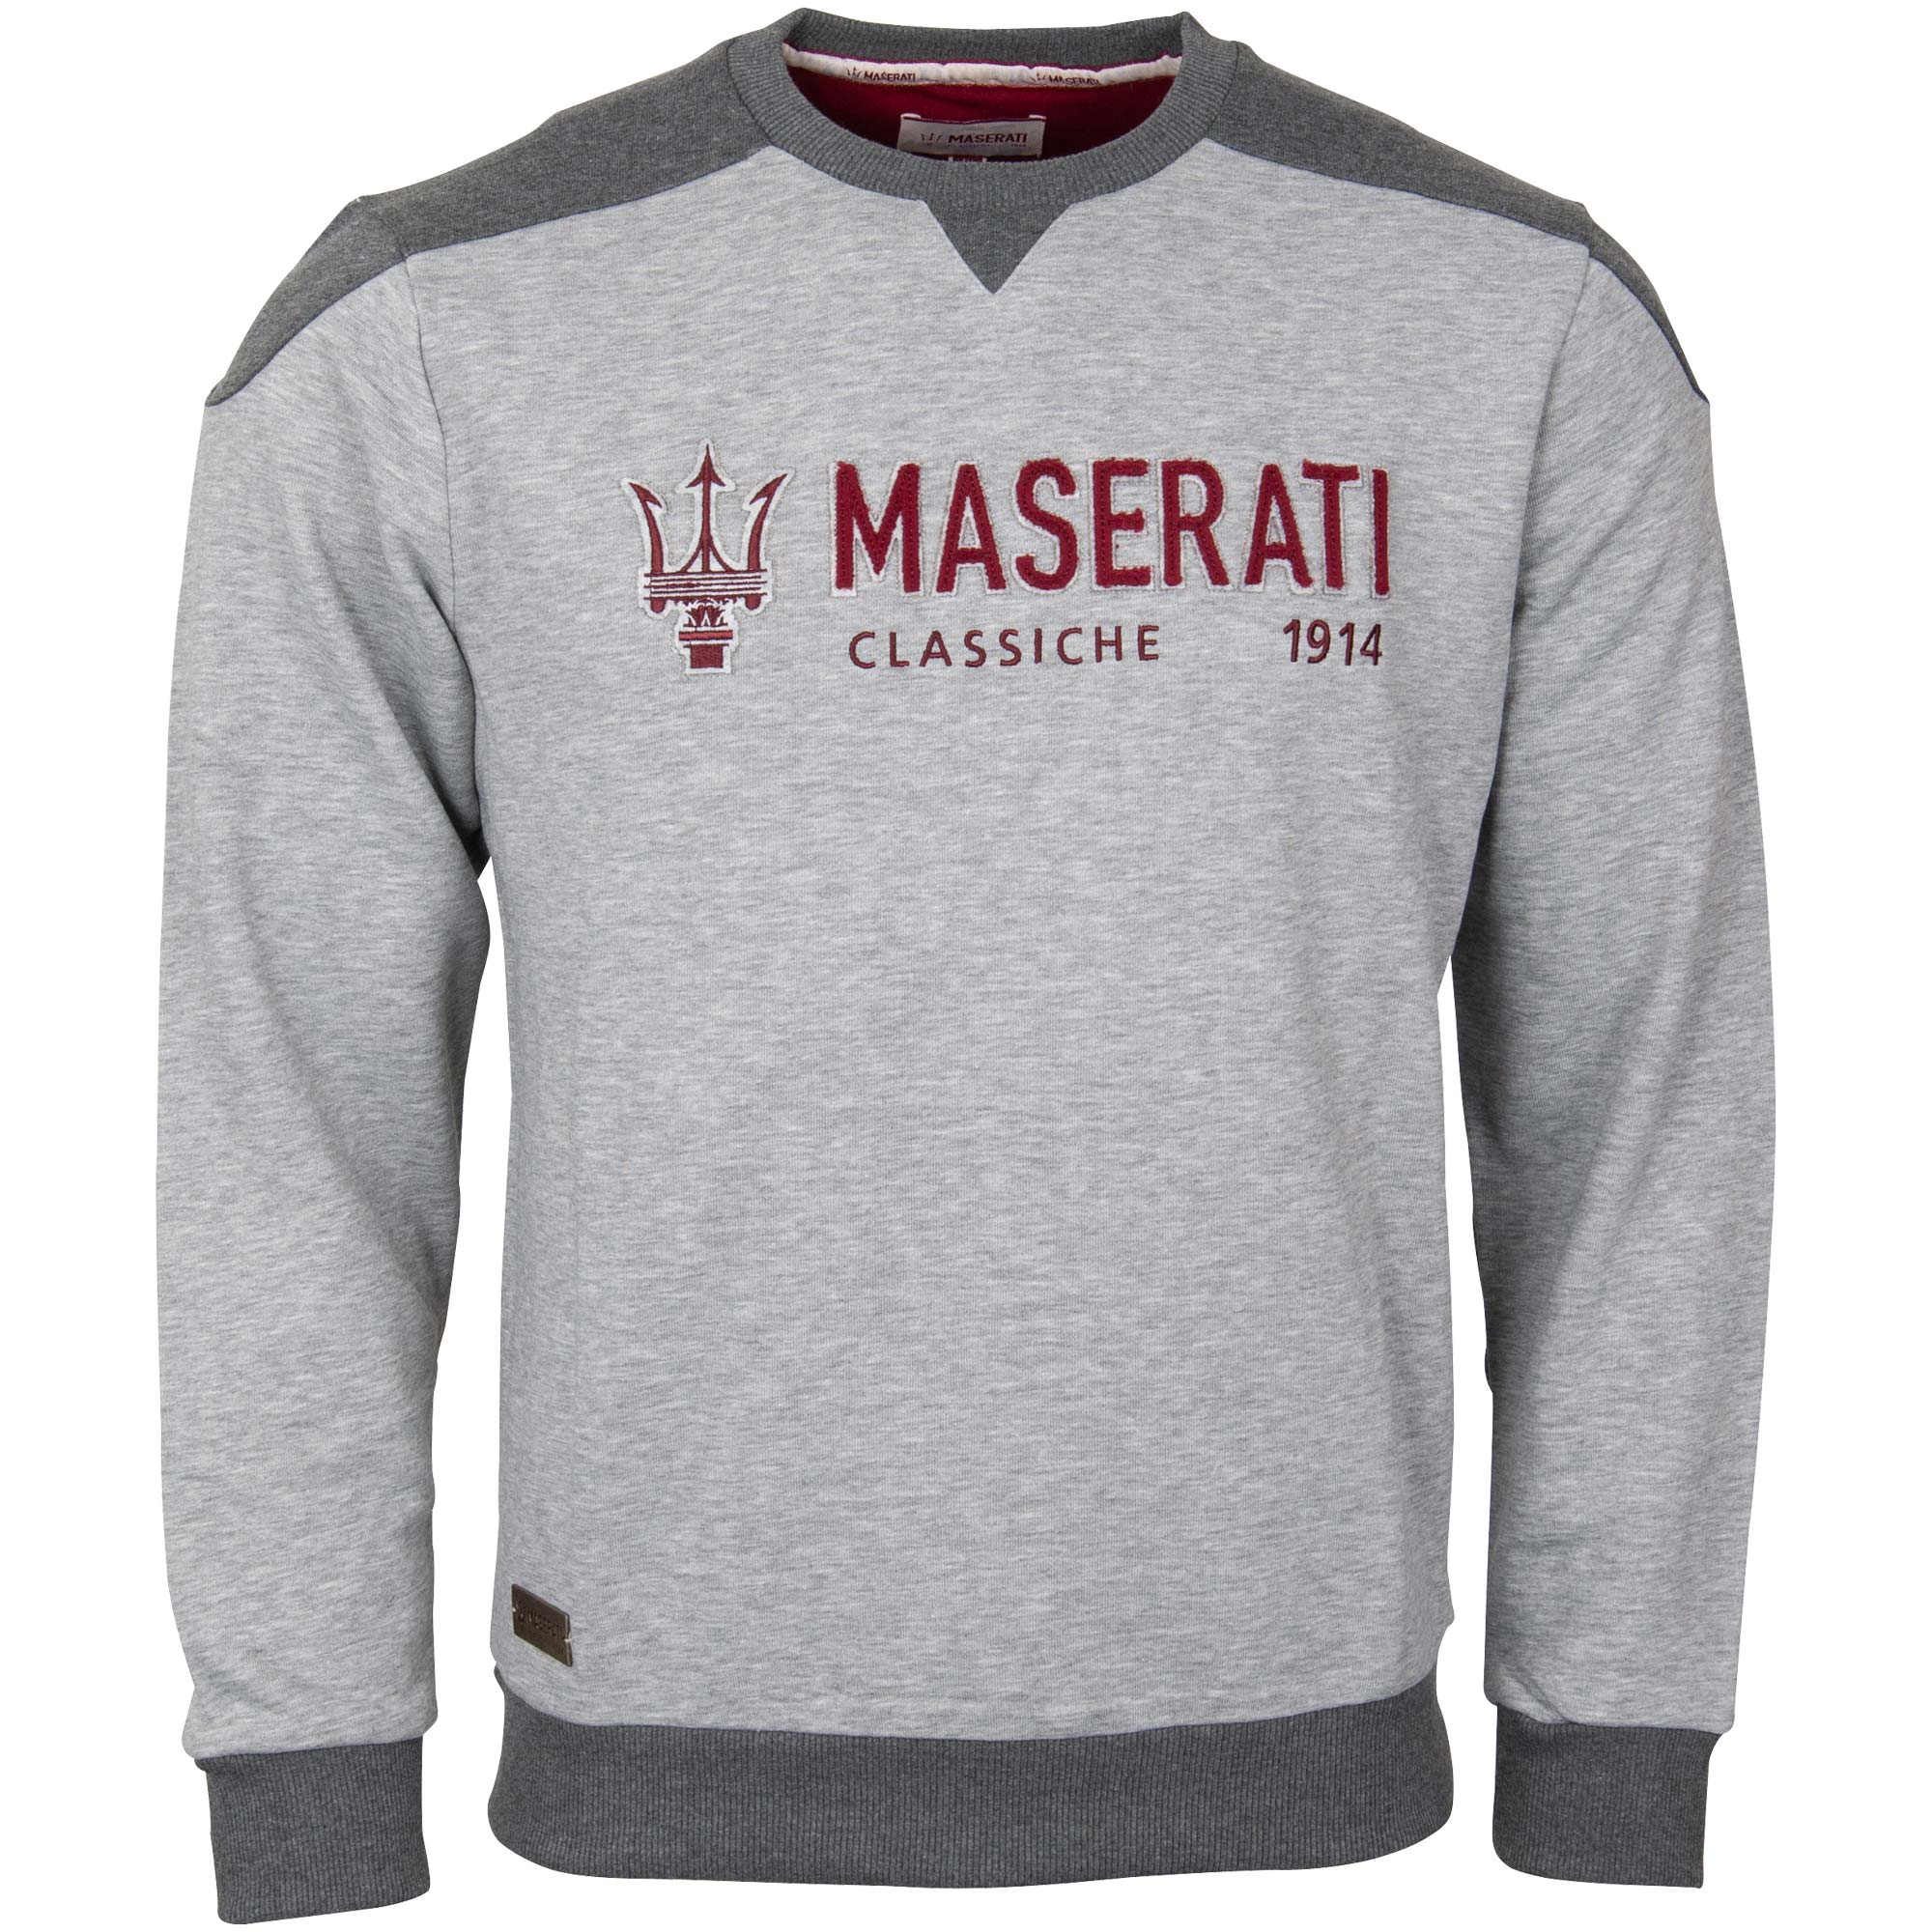 Maserati Classiche Sweatshirt "Lifestyle" - grey